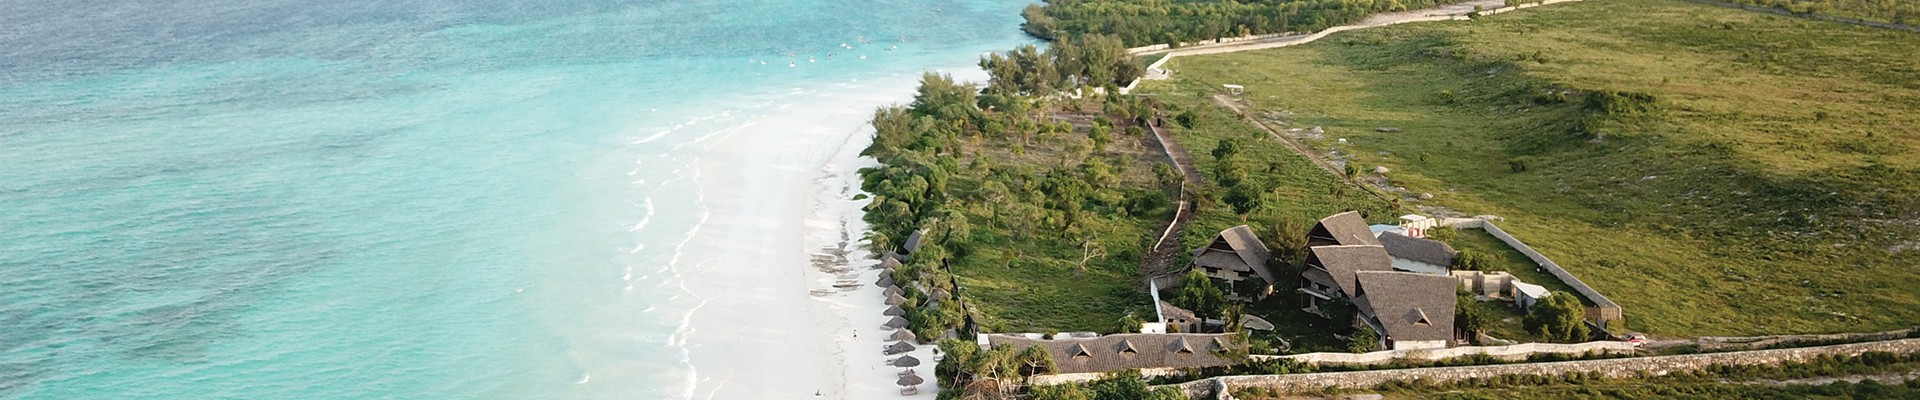 5* Emerald Resort & Spa - Zanzibar Package (5 Nights)